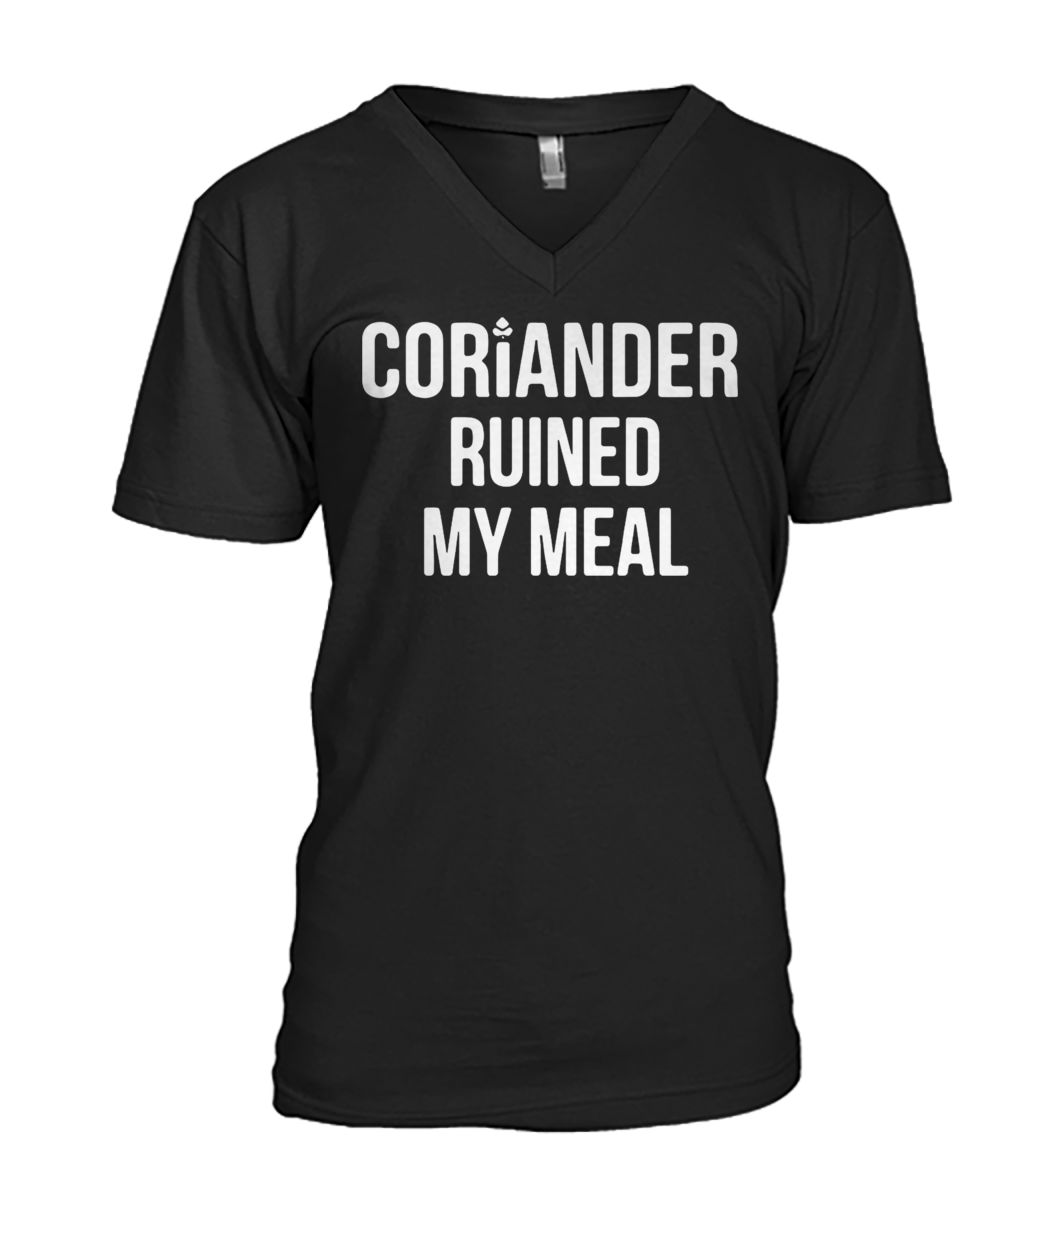 Coriander ruined my meal mens v-neck